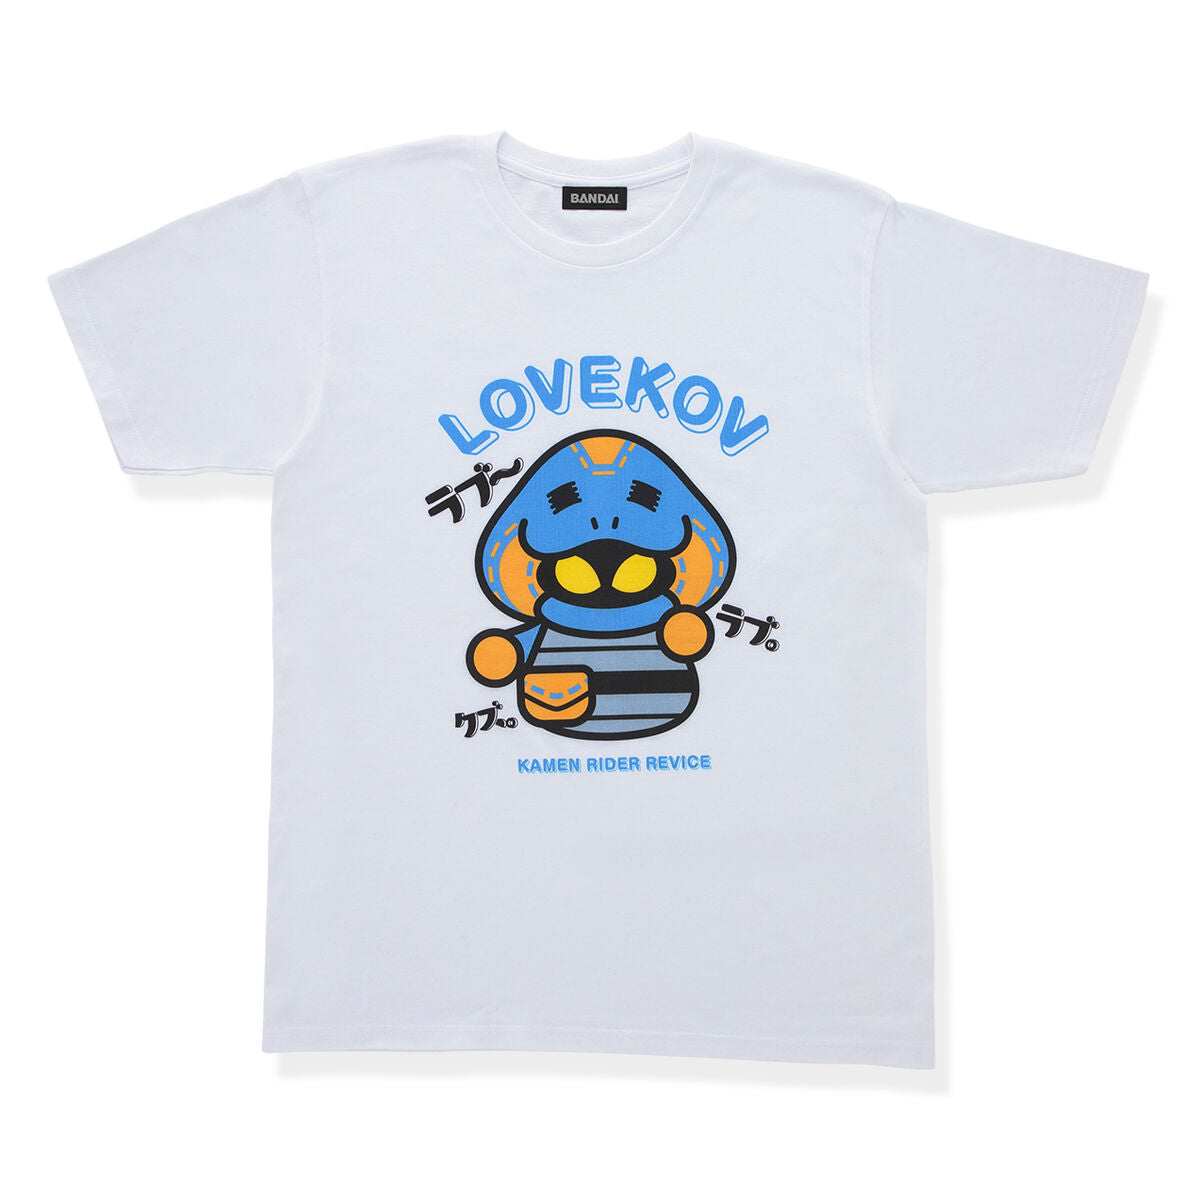 Lovekov T-Shirt